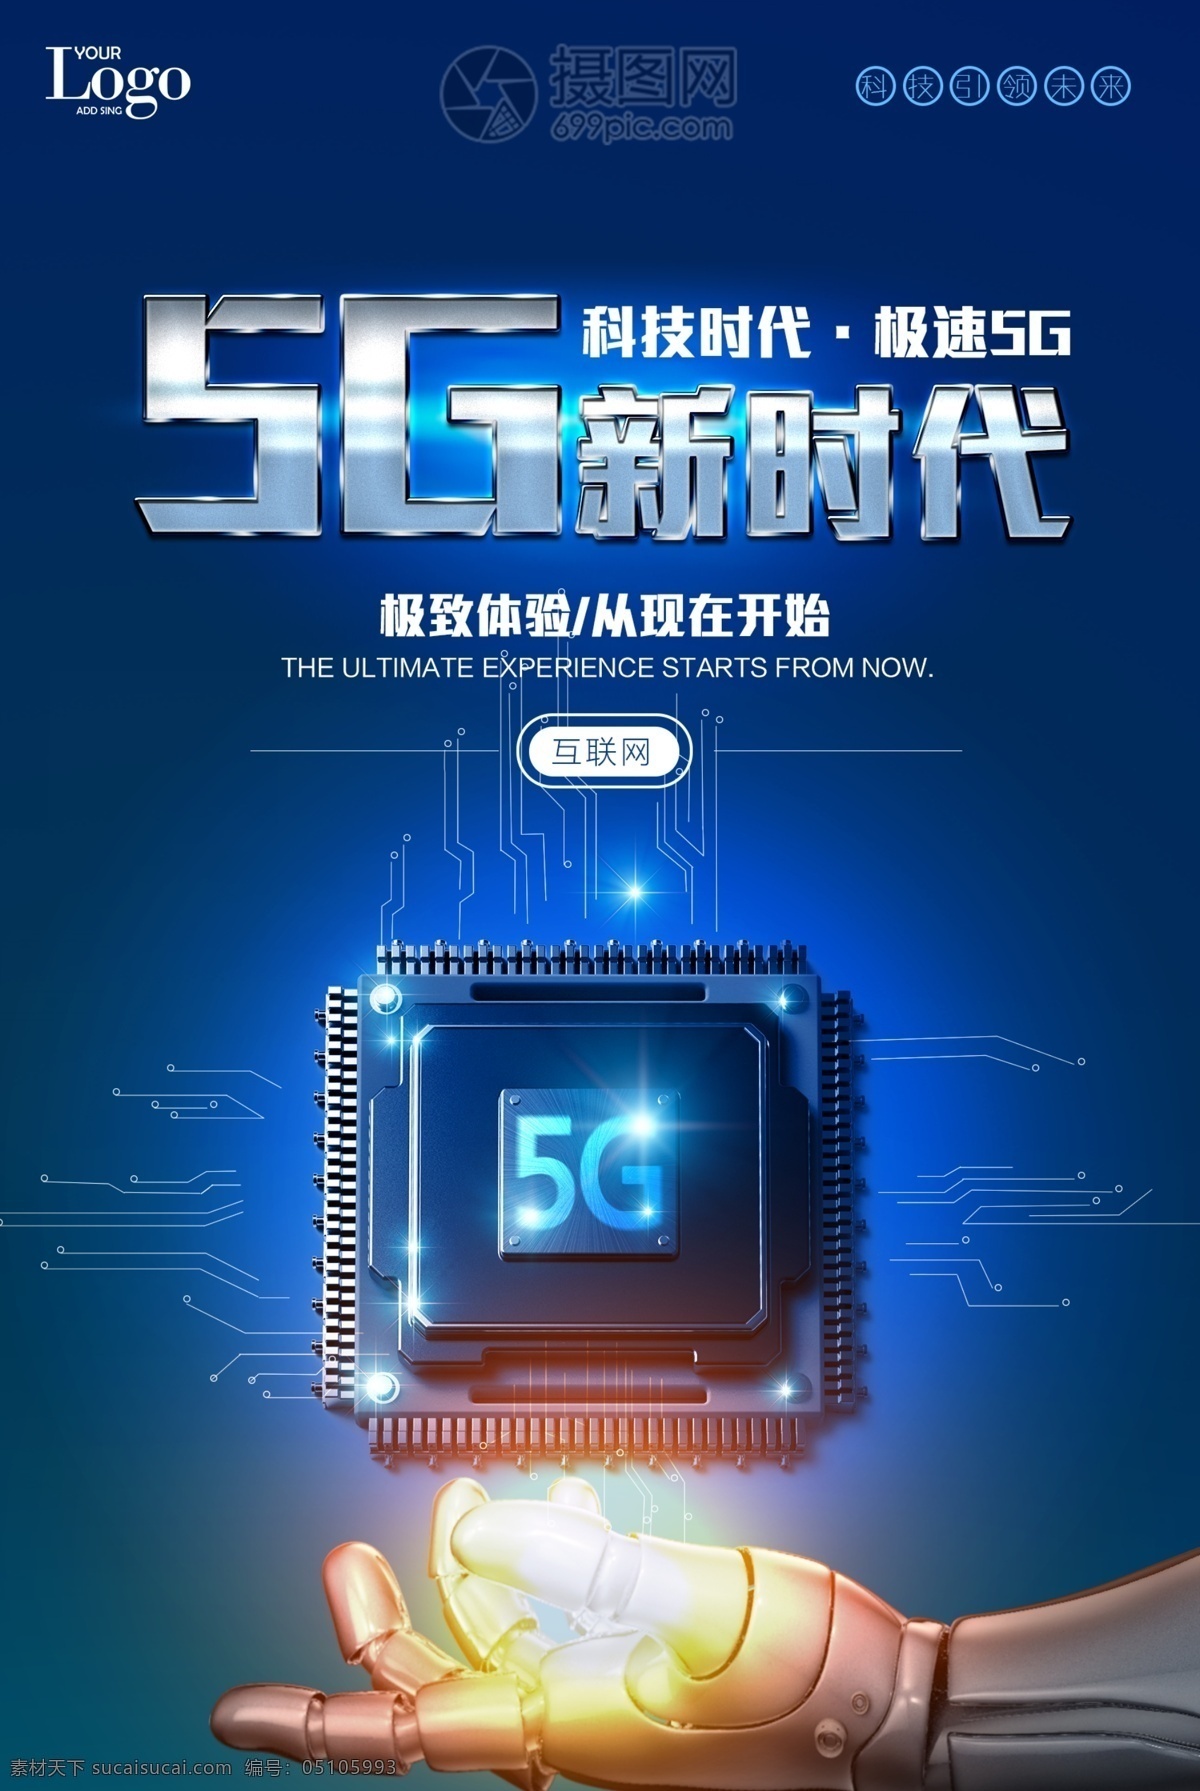 5g 新时代 科技 海报 5g网络 5g手机网络 5g通讯 未来科技 5g技术 科技互联网 芯片 机器手 智能科技 5g海报